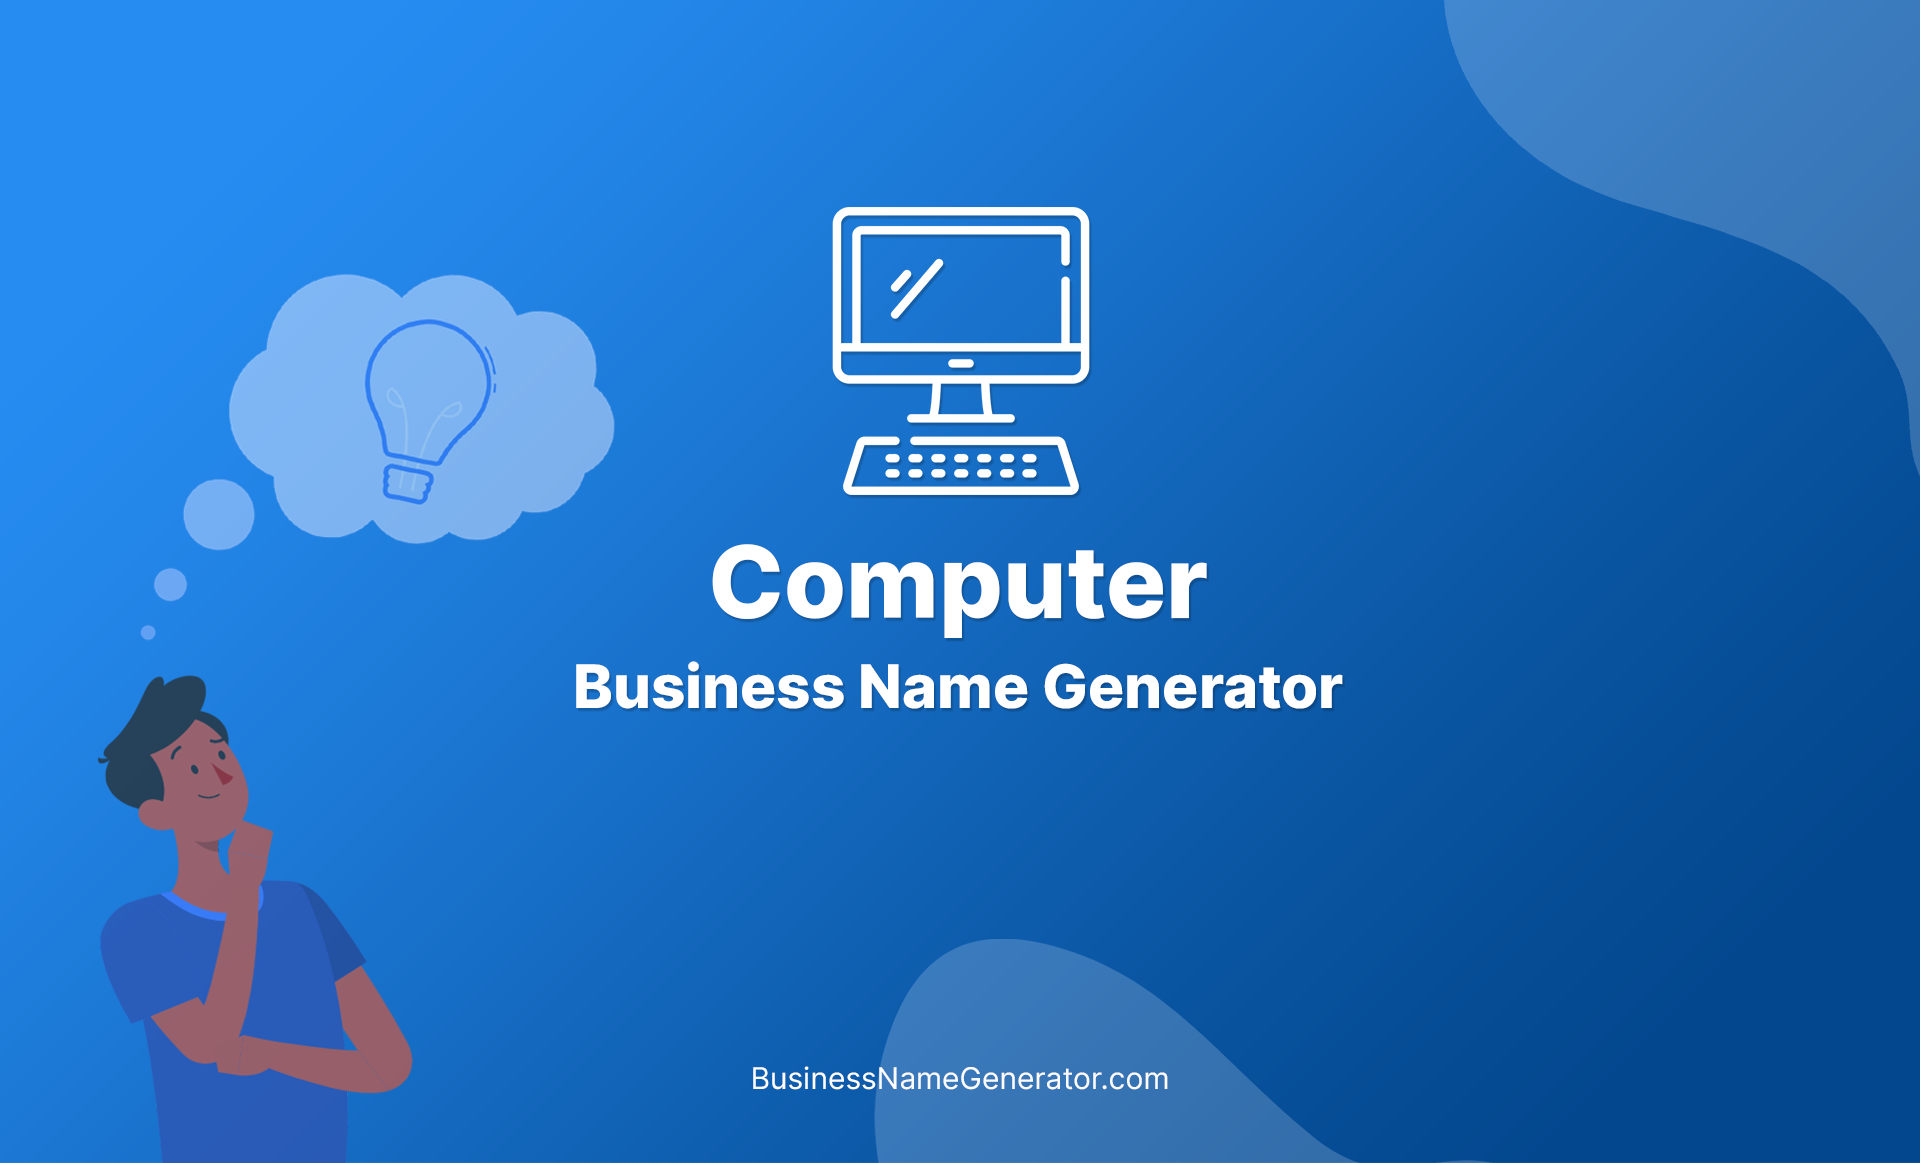 Computer Business Name Generator